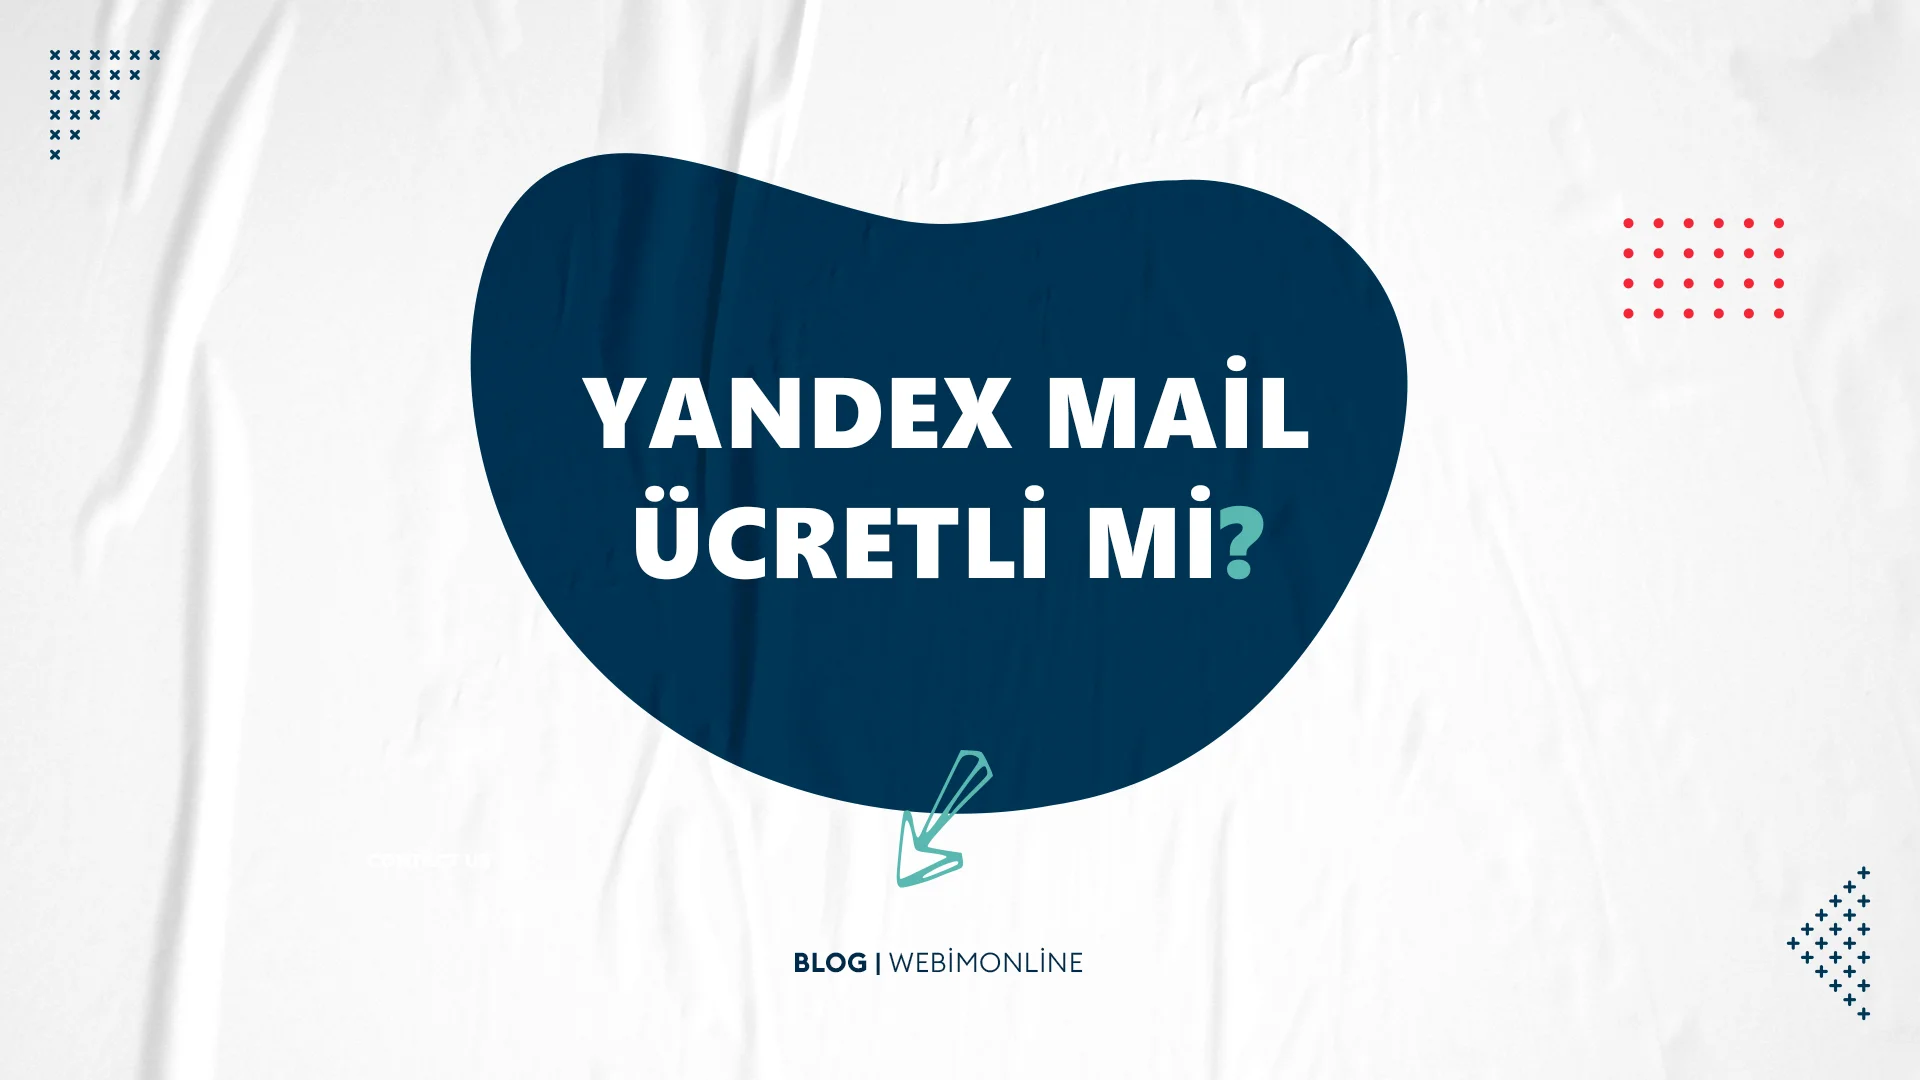 Yandex Mail Ücretli mi?